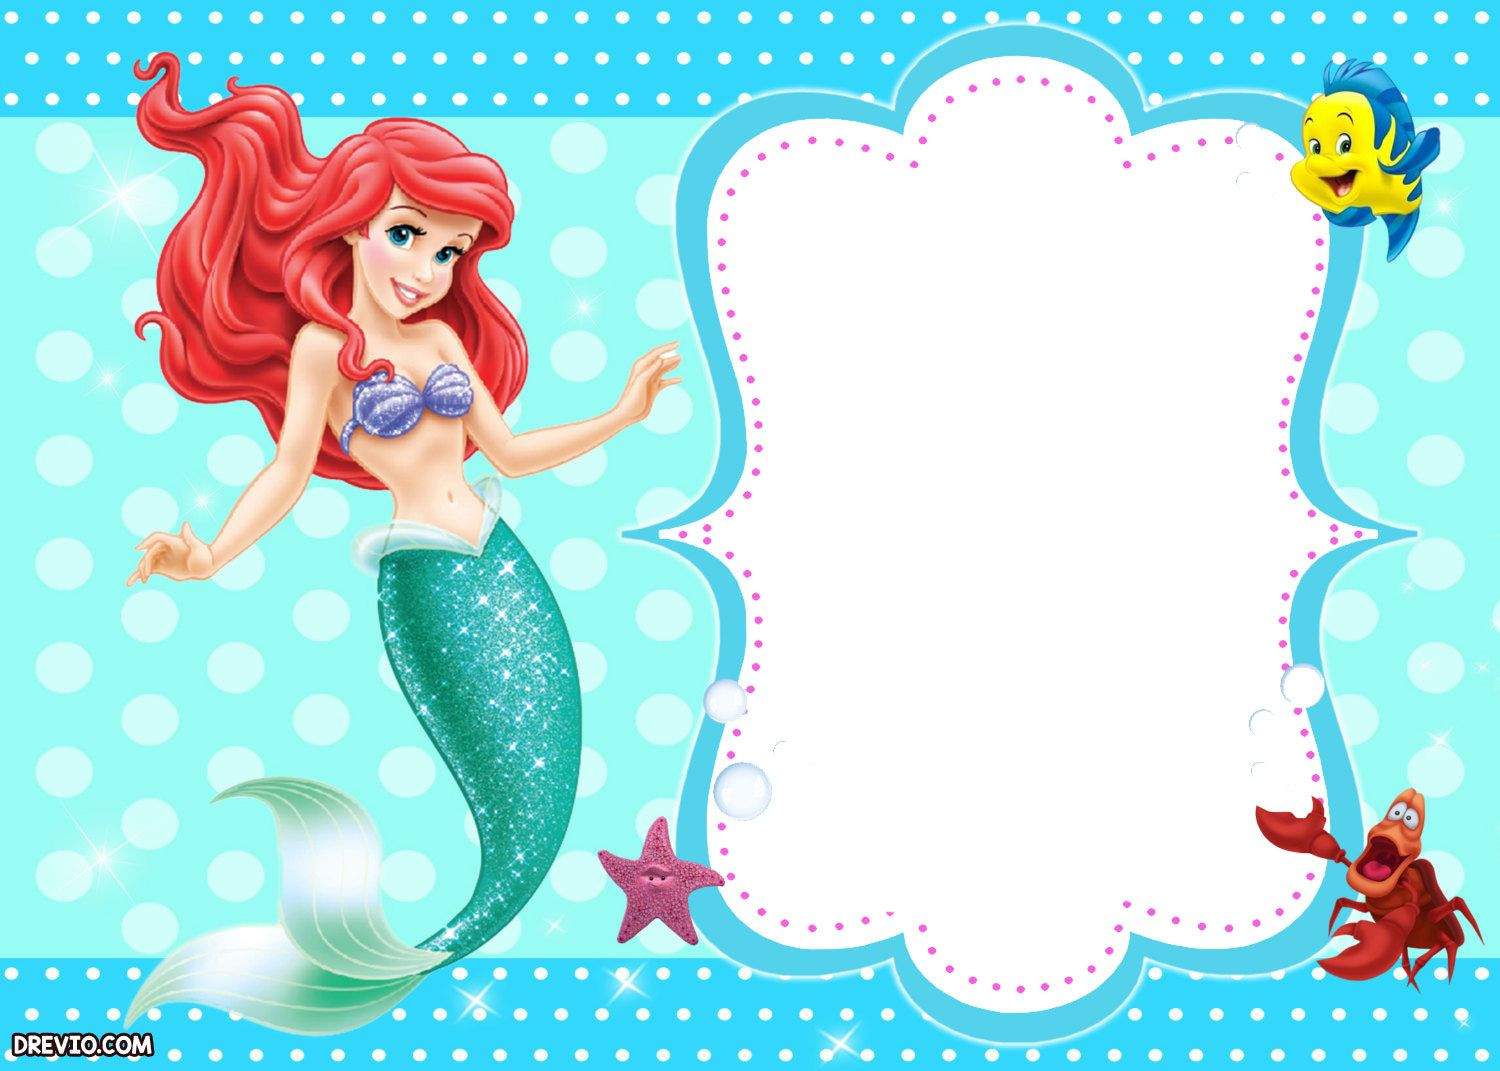 Little Mermaid Party Invitation Ideas
 Updated Free Printable Ariel the Little Mermaid